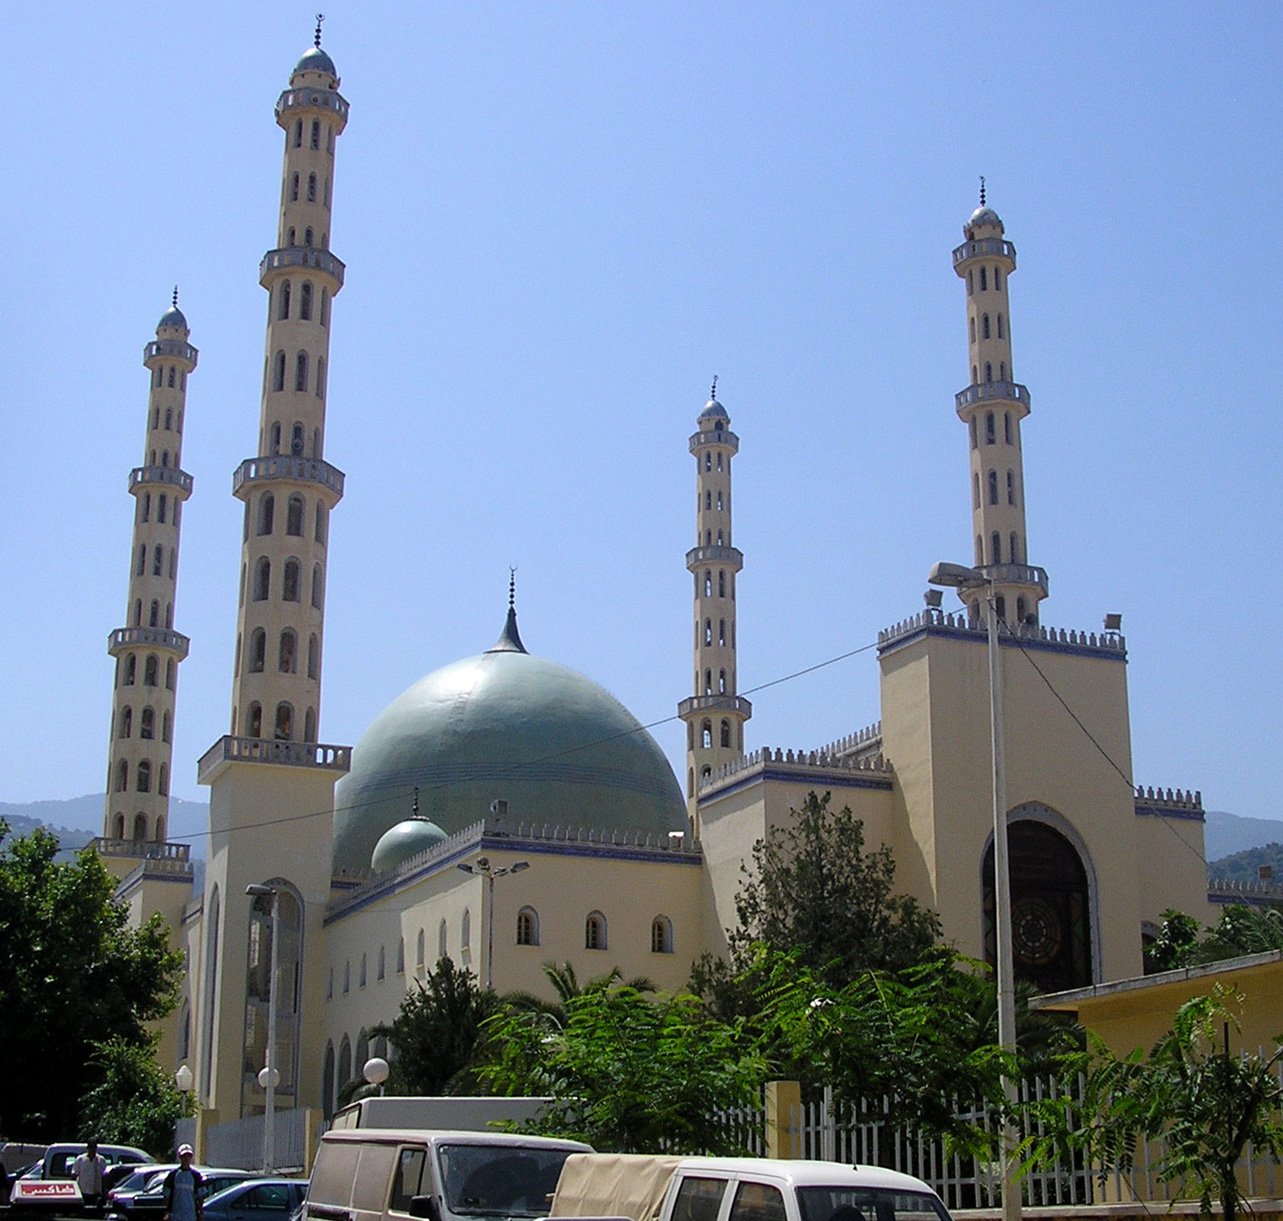 https://upload.wikimedia.org/wikipedia/commons/6/6d/Al-Kawthar_Mosque_in_Blida%2C_Algeria.jpg